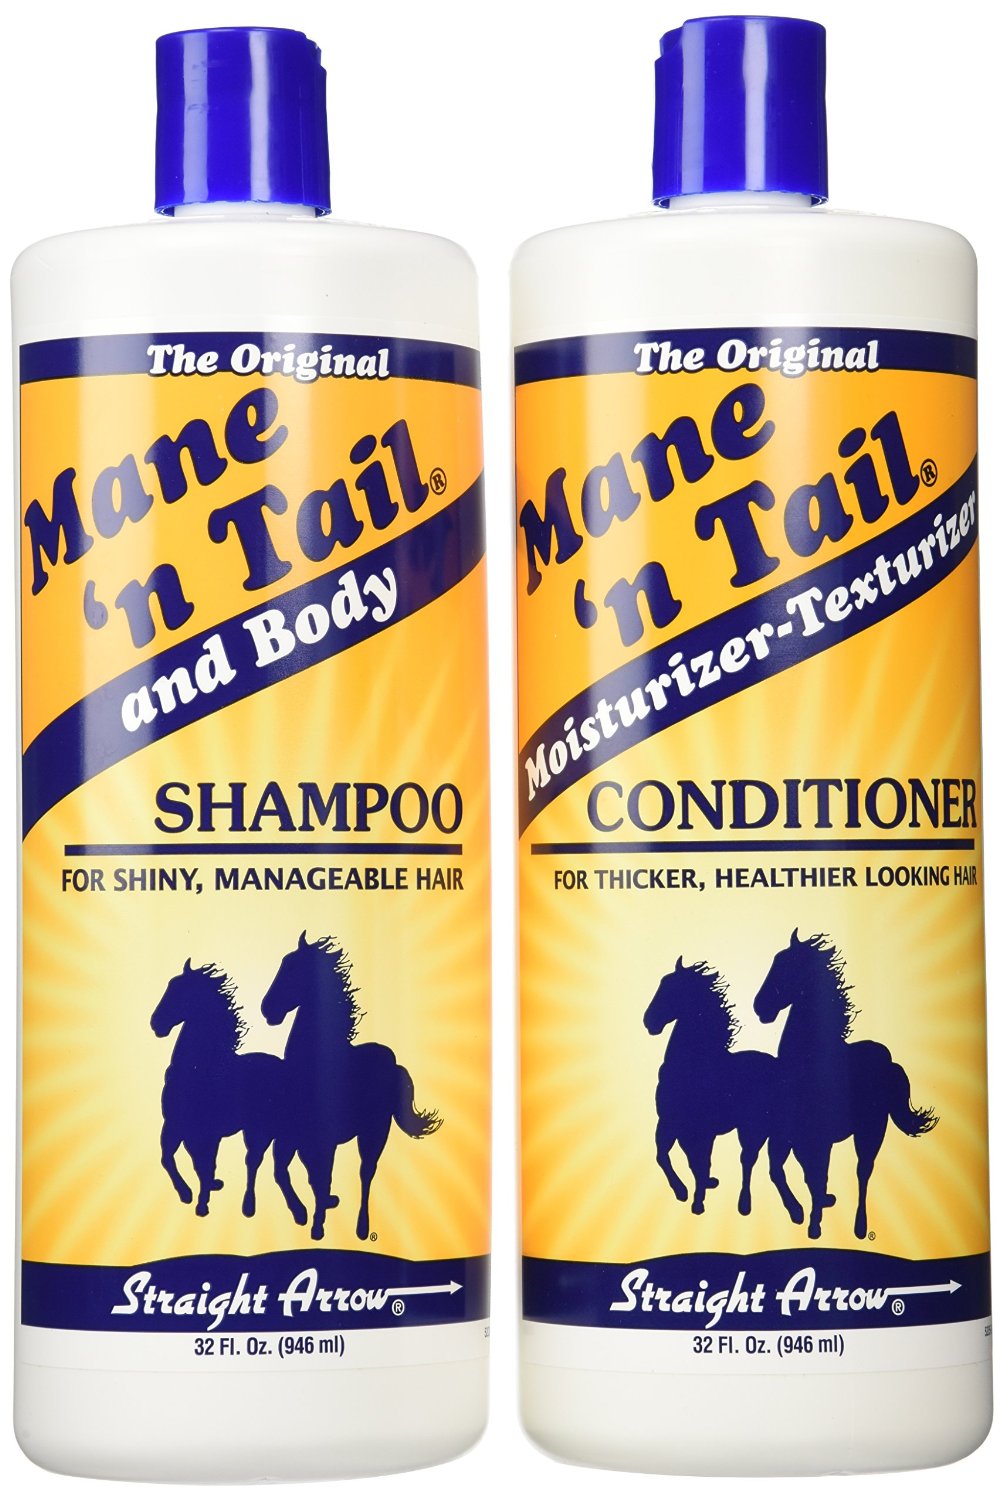 Mane 'n Shampoo/Conditioner - Tack